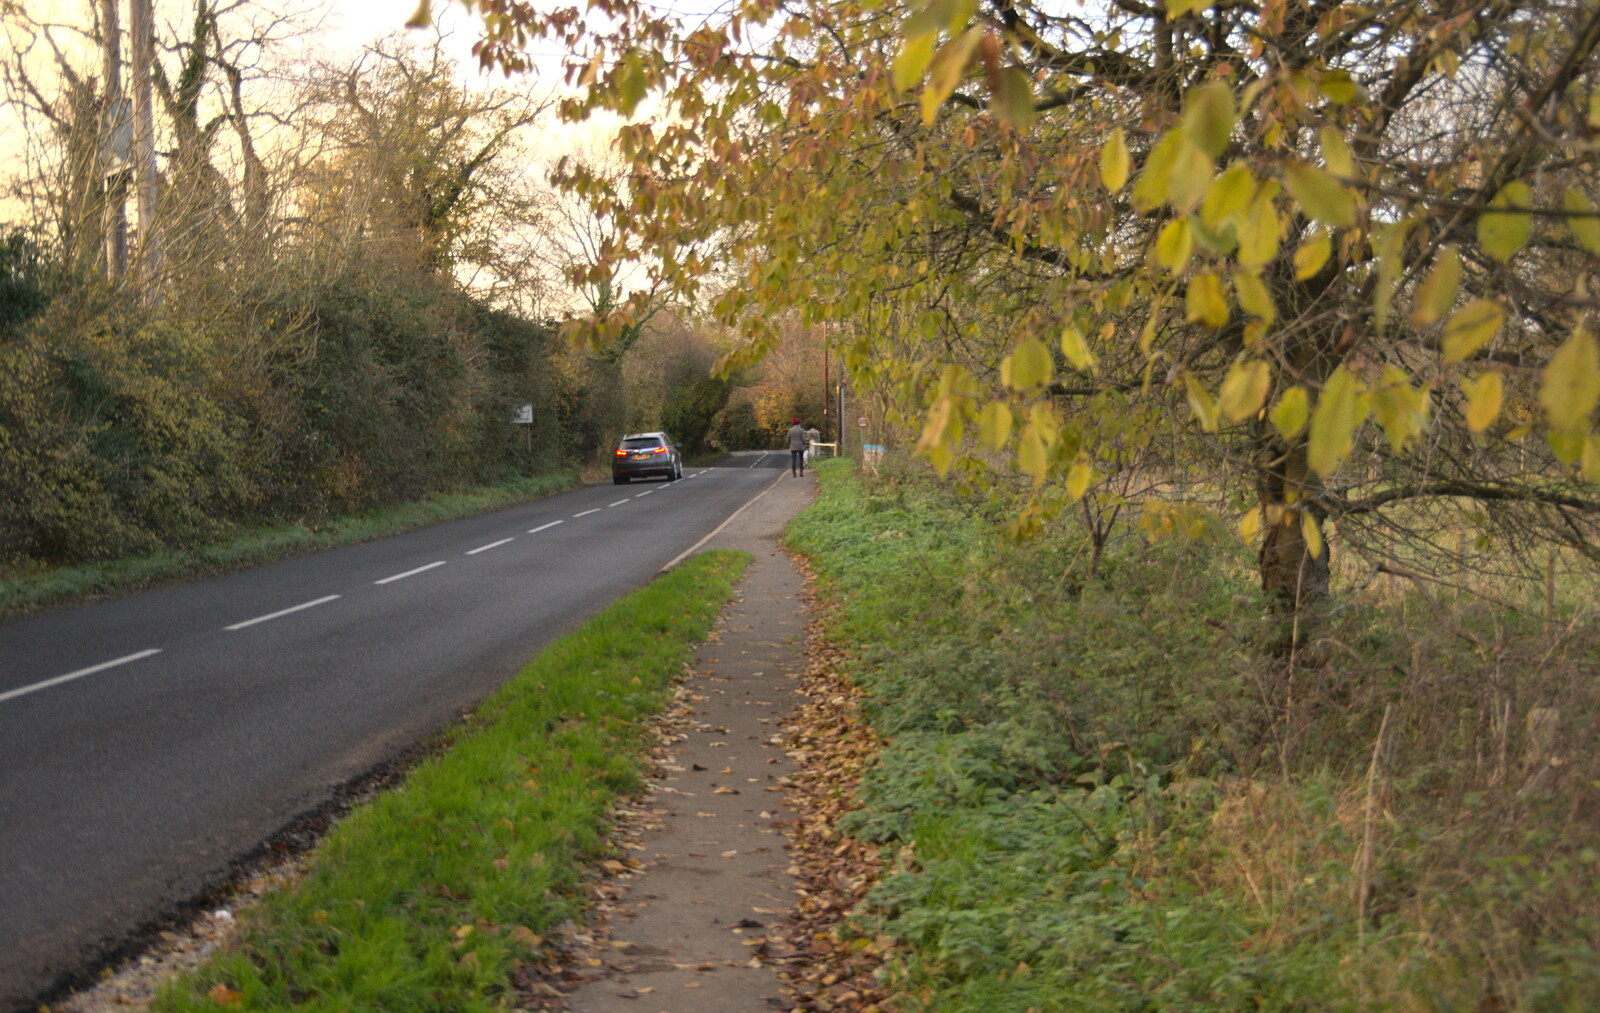 Cranley Green Road from A Walk Around Eye, Suffolk - 19th November 2017